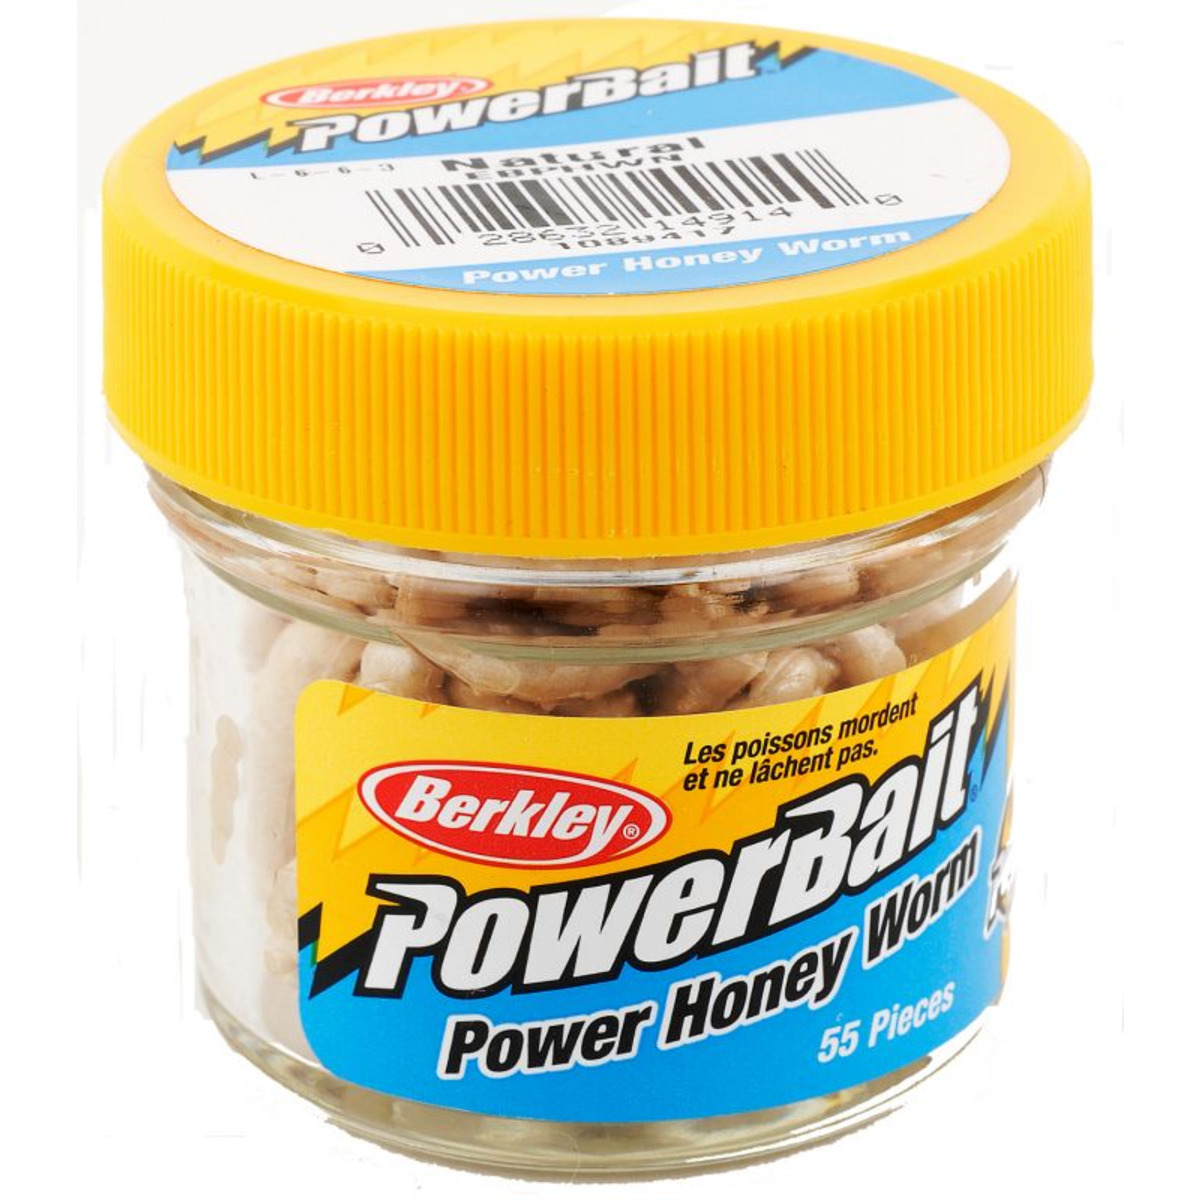 Berkley Powerbait Power Honey Worms - 2.5 cm - White